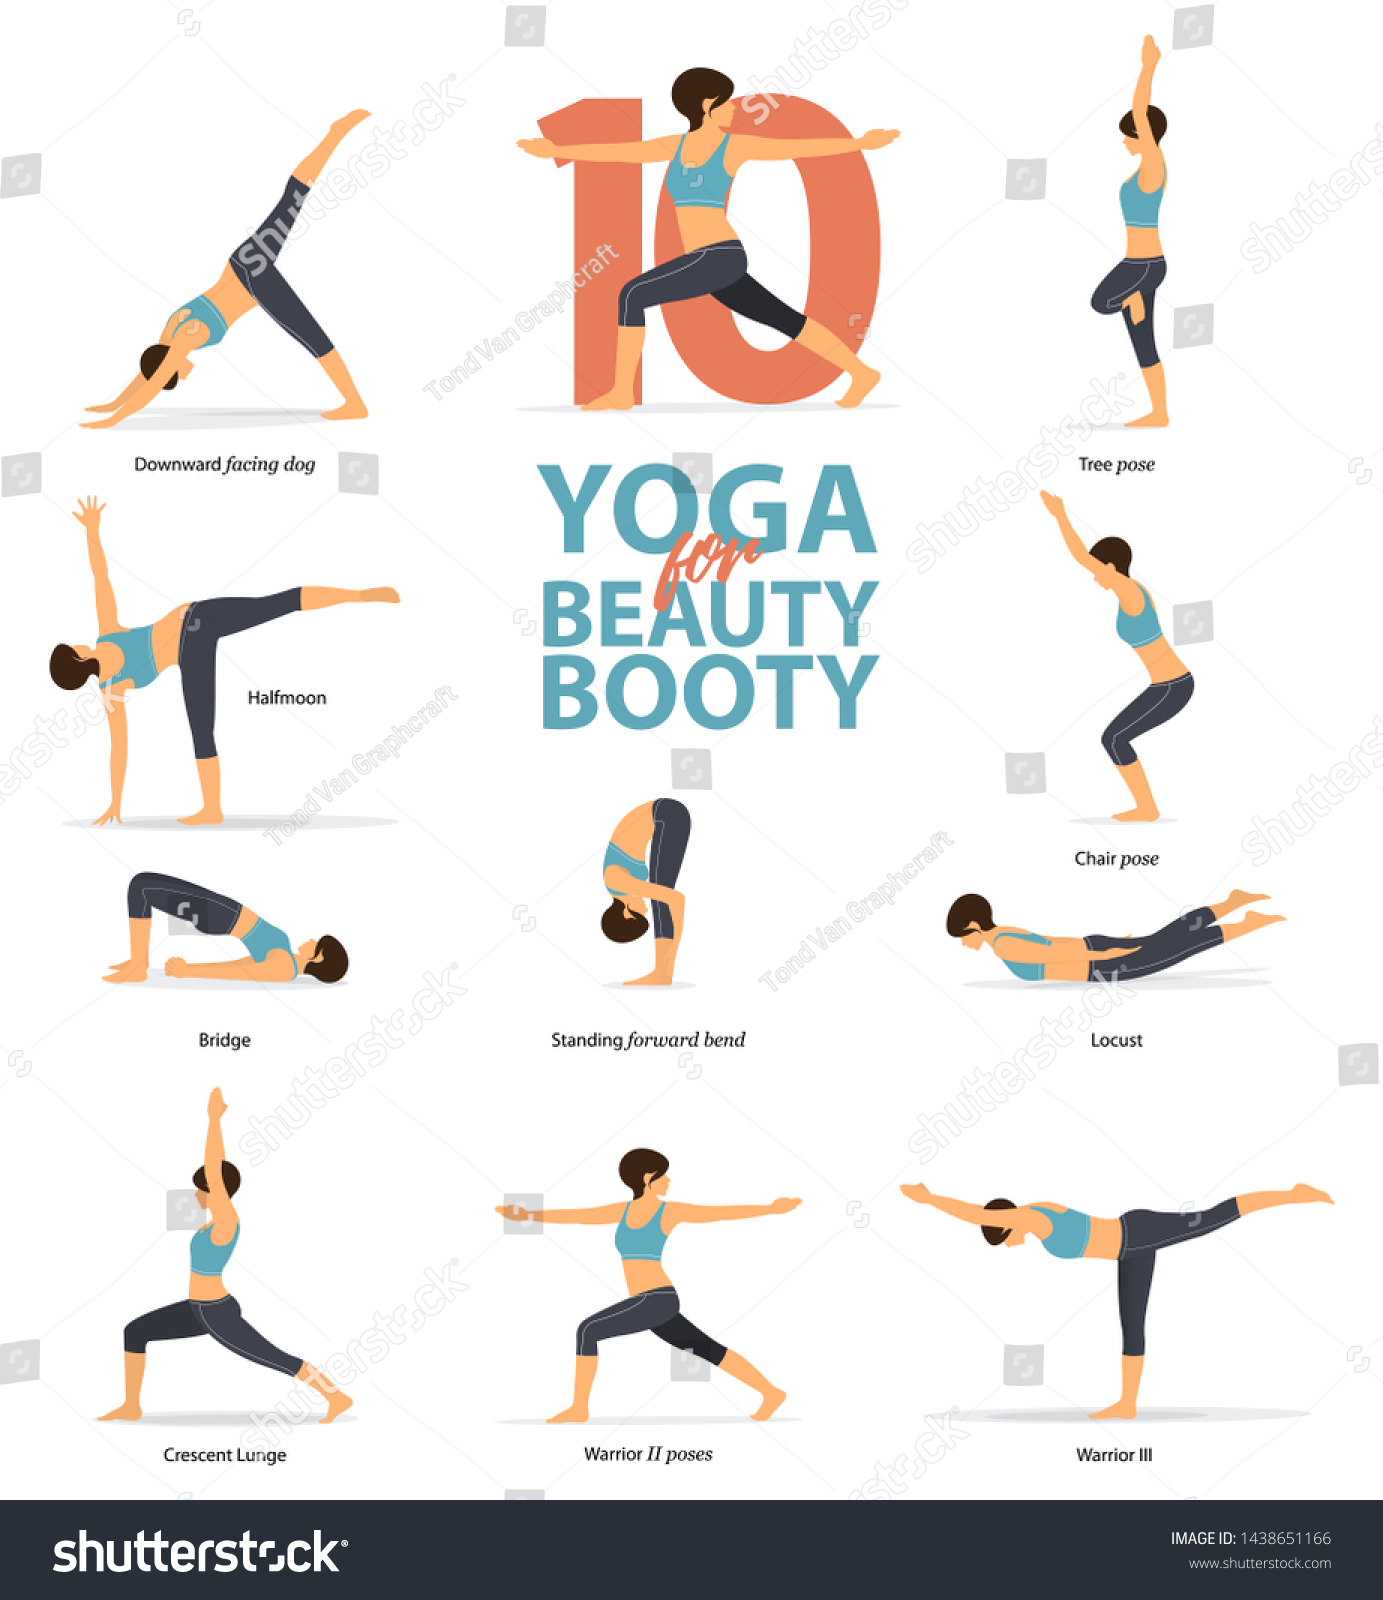 Getting That Yoga Booty